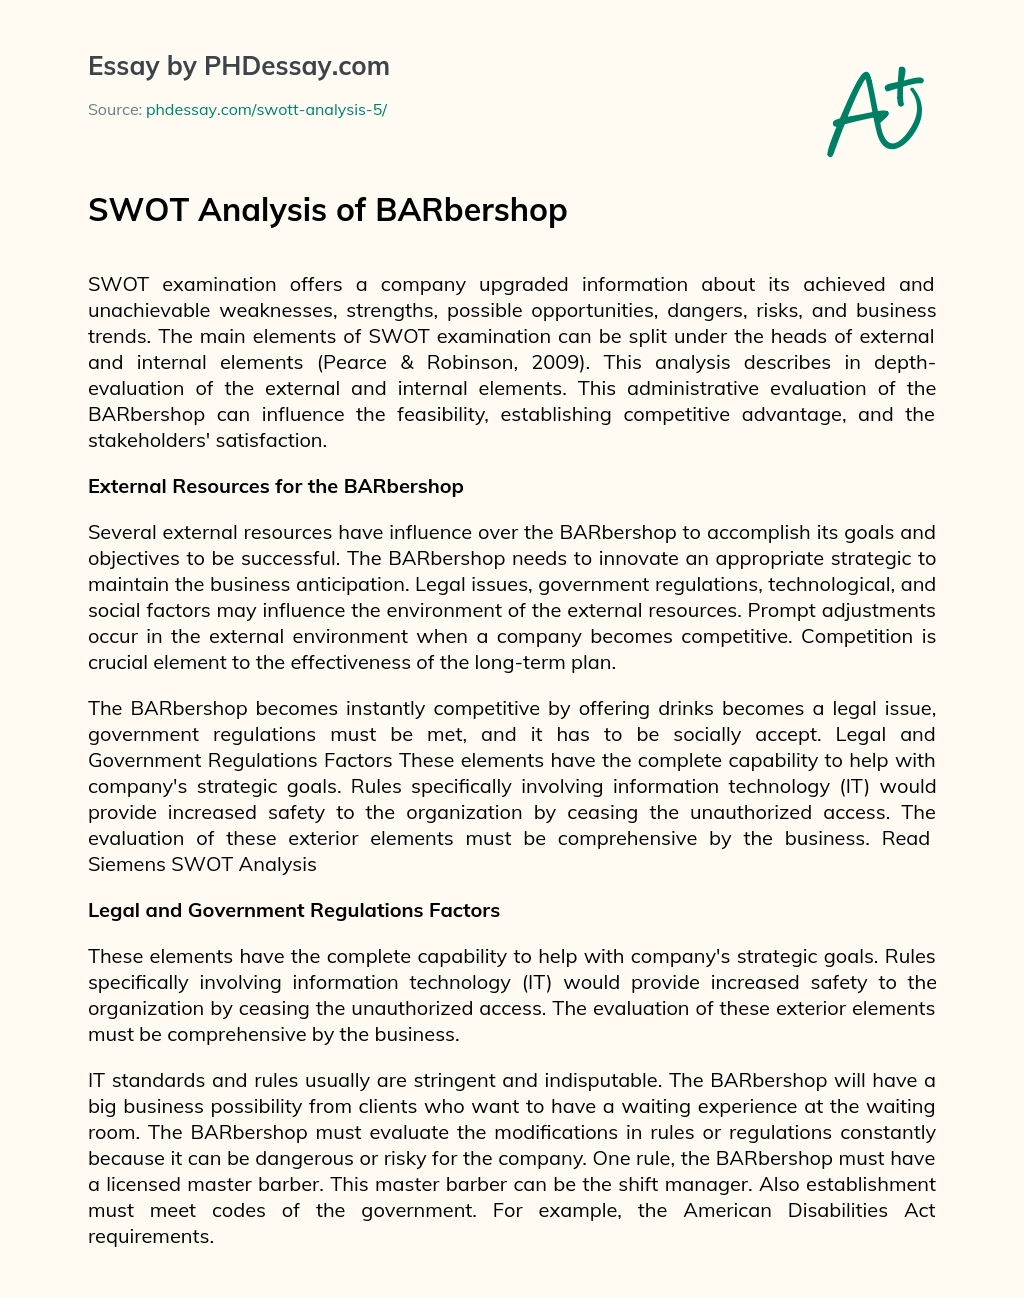 SWOT Analysis of BARbershop essay